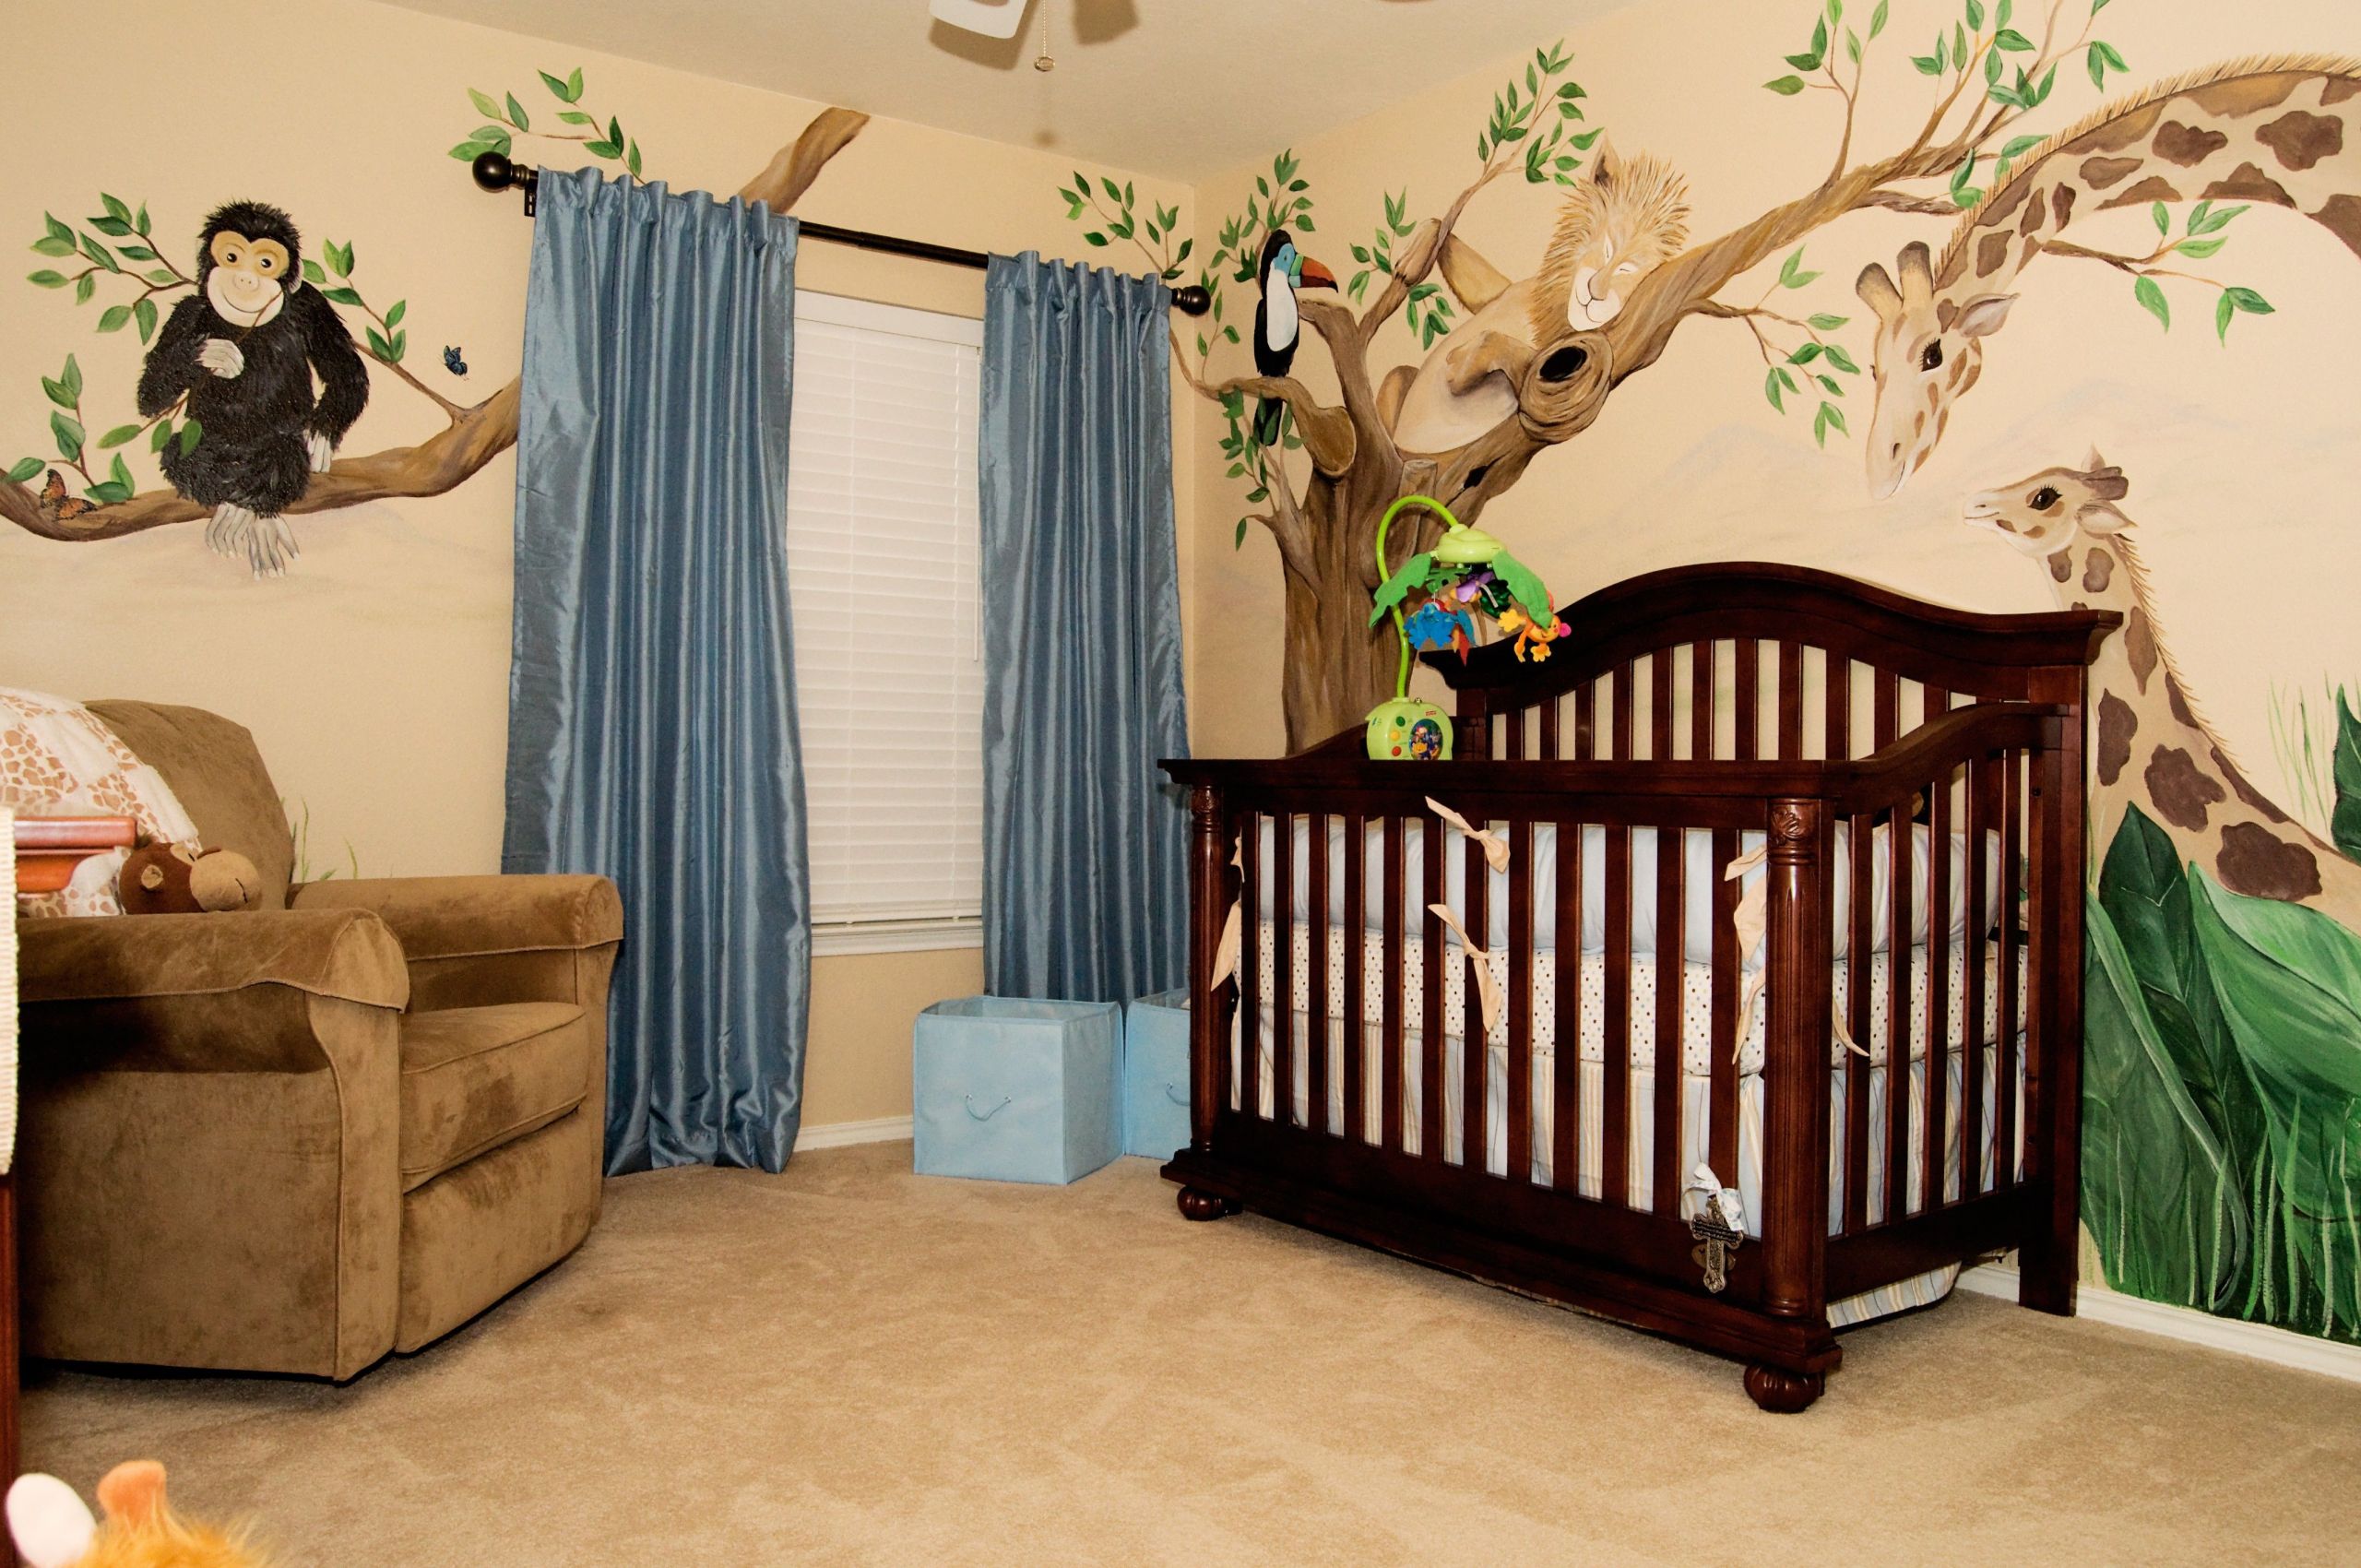 Baby Decor Room Ideas
 boy baby nursery closet ideas boy decorating room decor